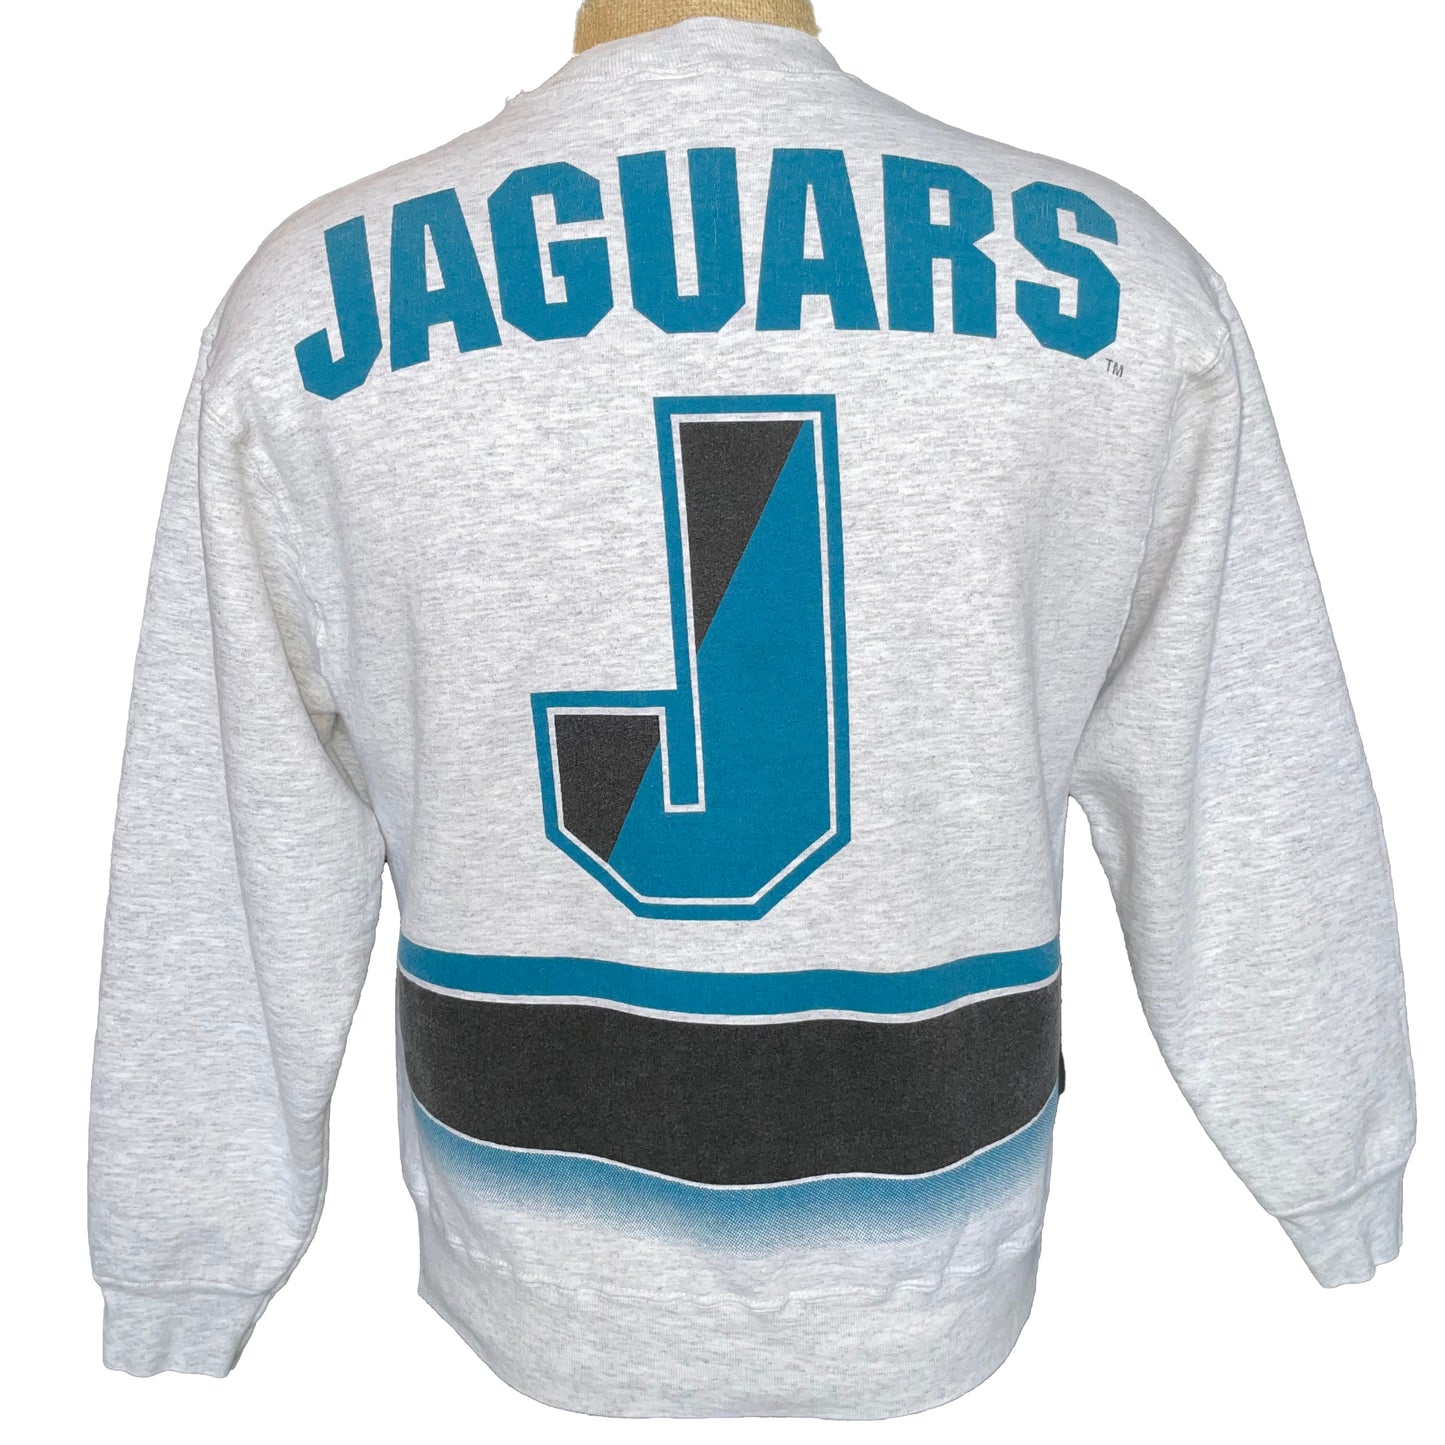 Vintage Jacksonville Jaguars 1994 TWO-SIDED banned logo SALEM sweatshirt size MEDIUM